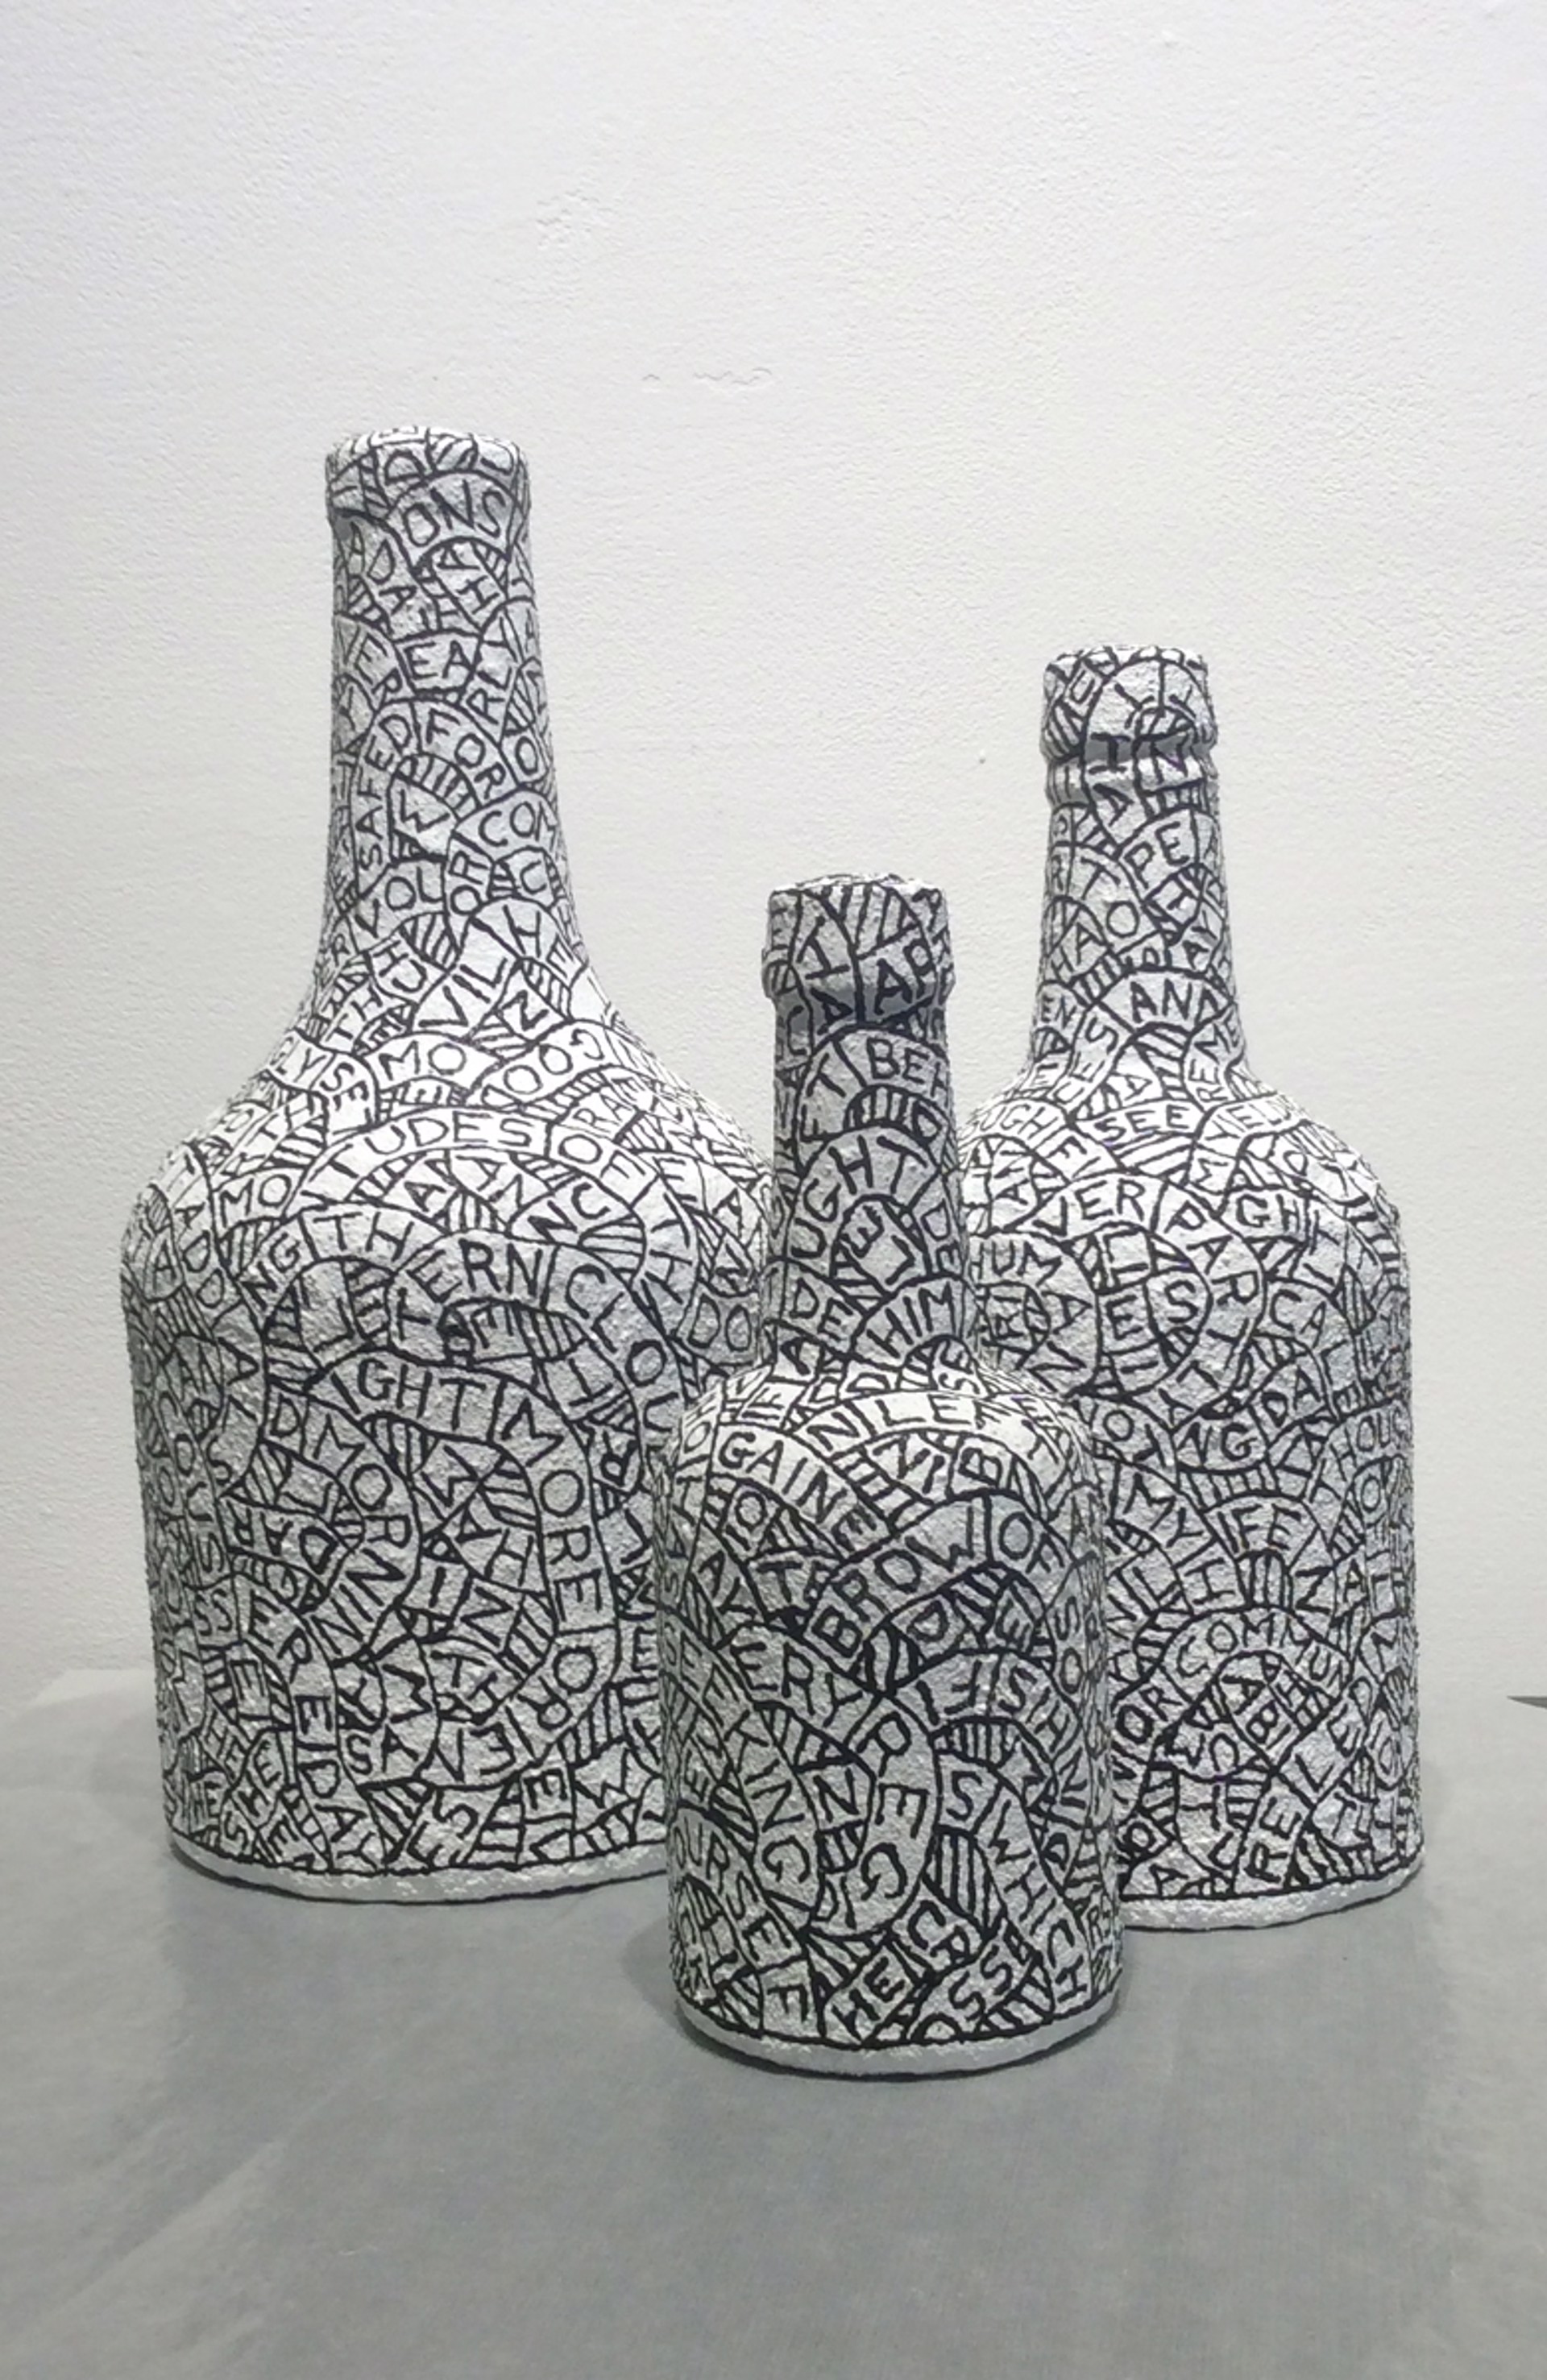 Three Bottles by Paul Katz